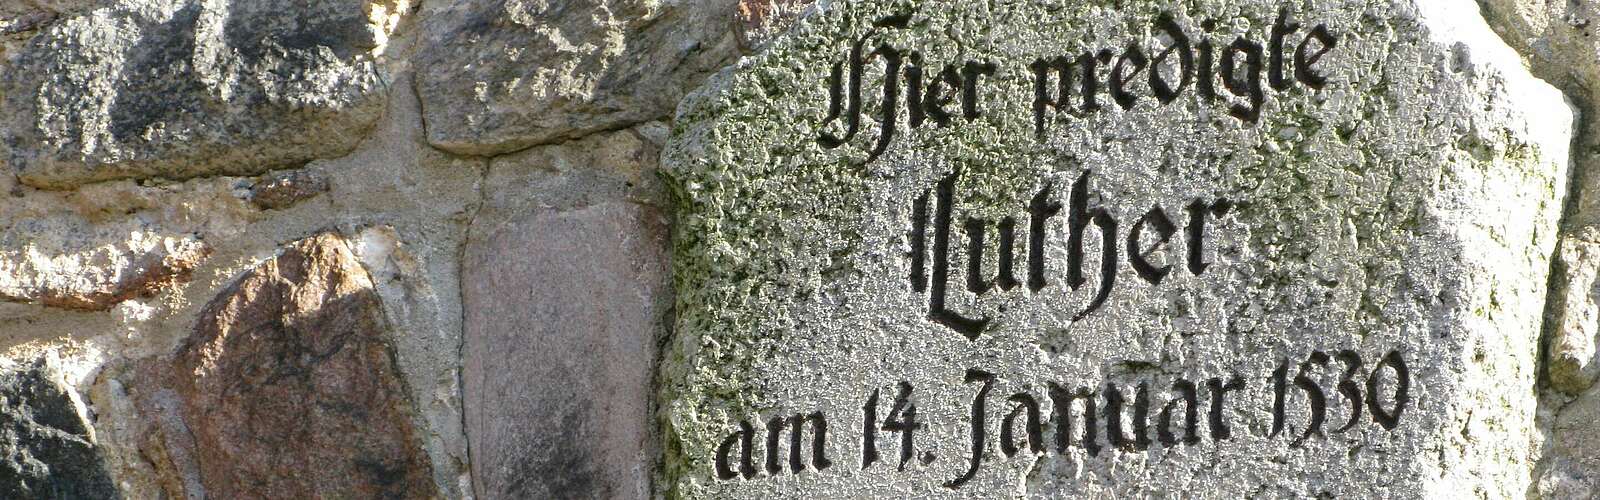 Lutherstein in Bad Belzig,
        
    

        Foto: TMB-Fotoarchiv/Lars Franke